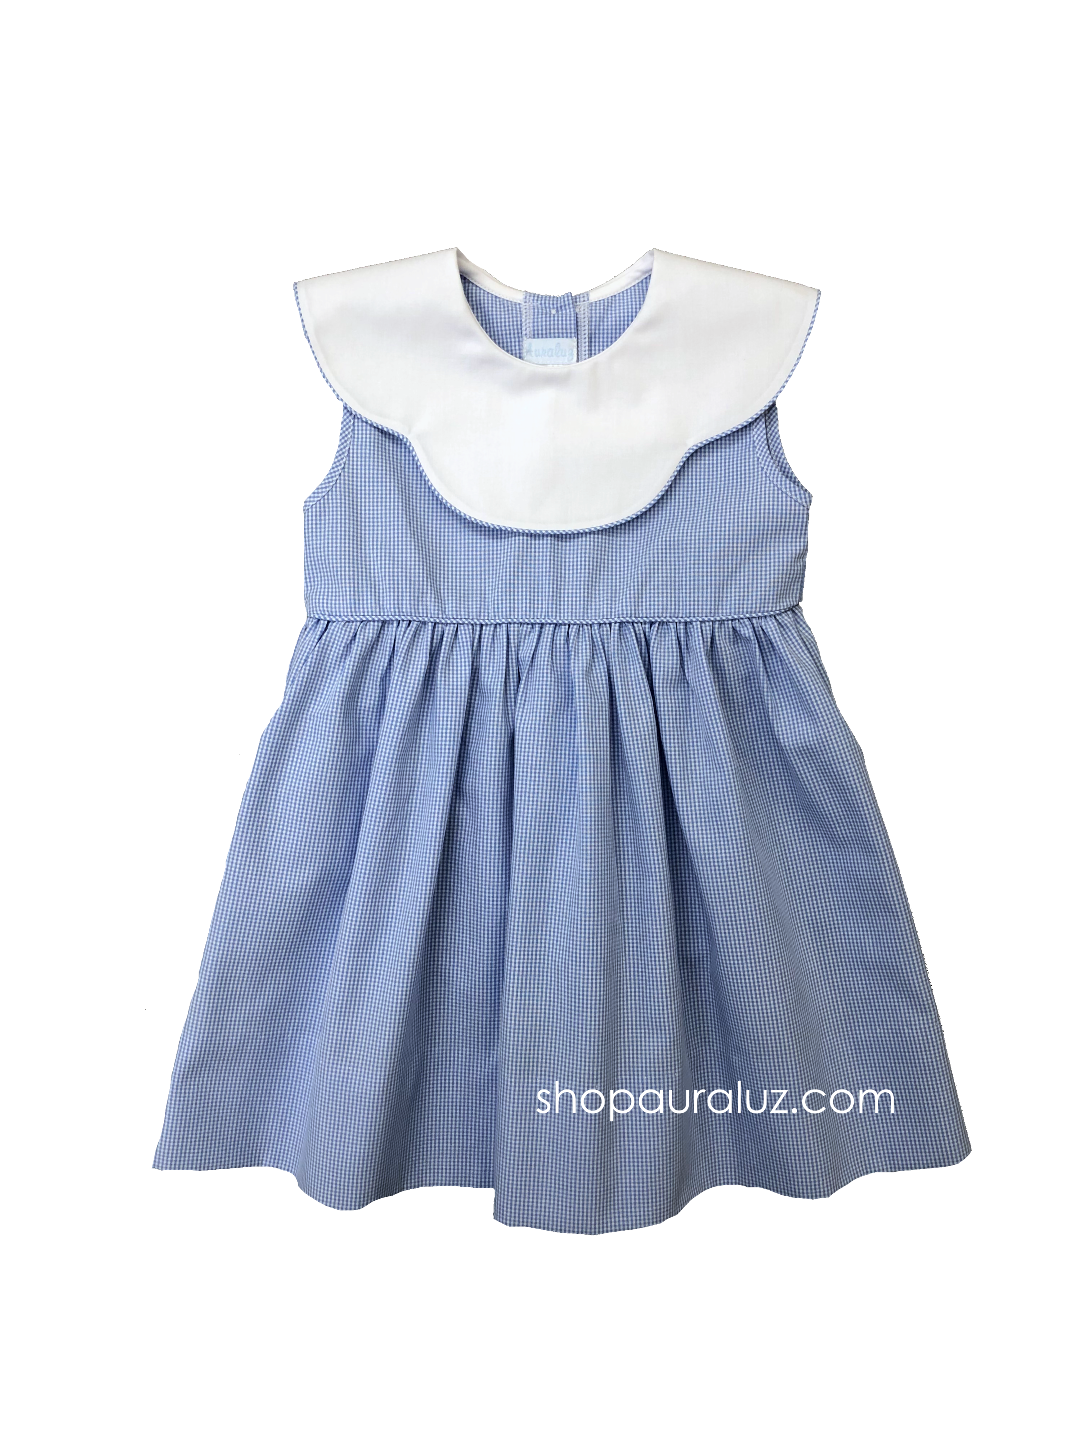 Auraluz Sleeveless Dress..Blue micro check w/binding and white scalloped collar